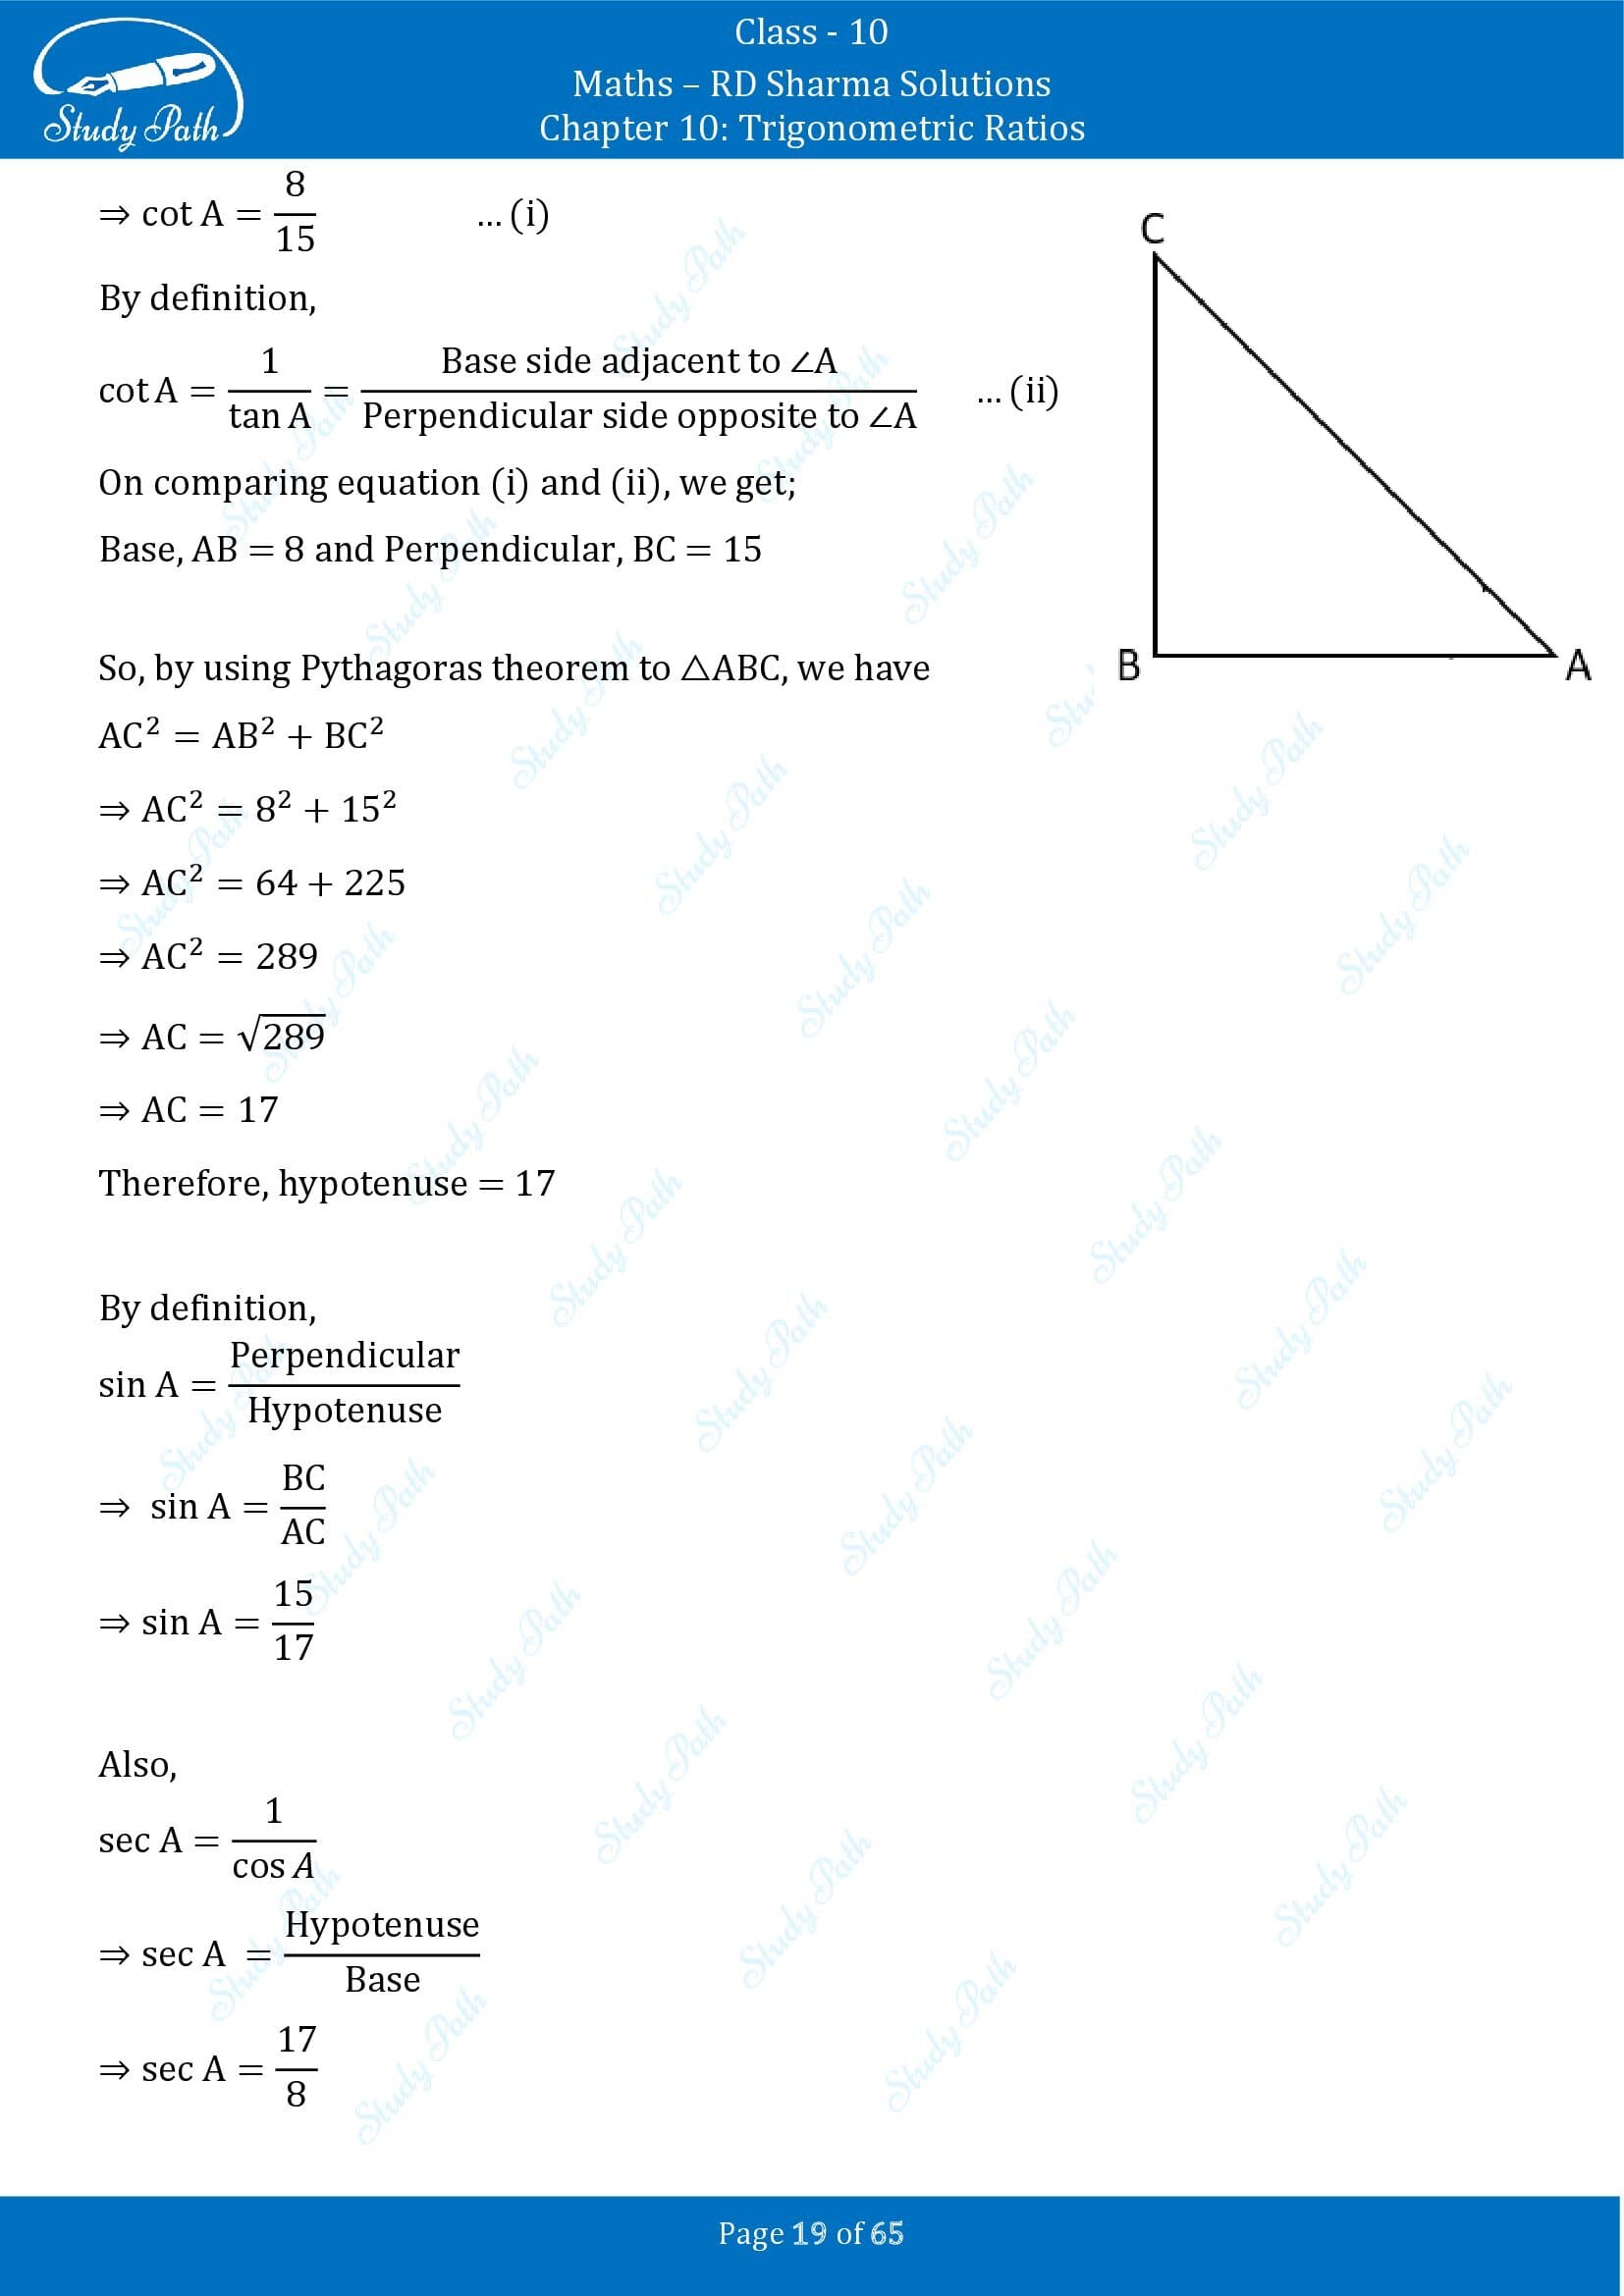 RD Sharma Solutions Class 10 Chapter 10 Trigonometric Ratios Exercise 10.1 00019